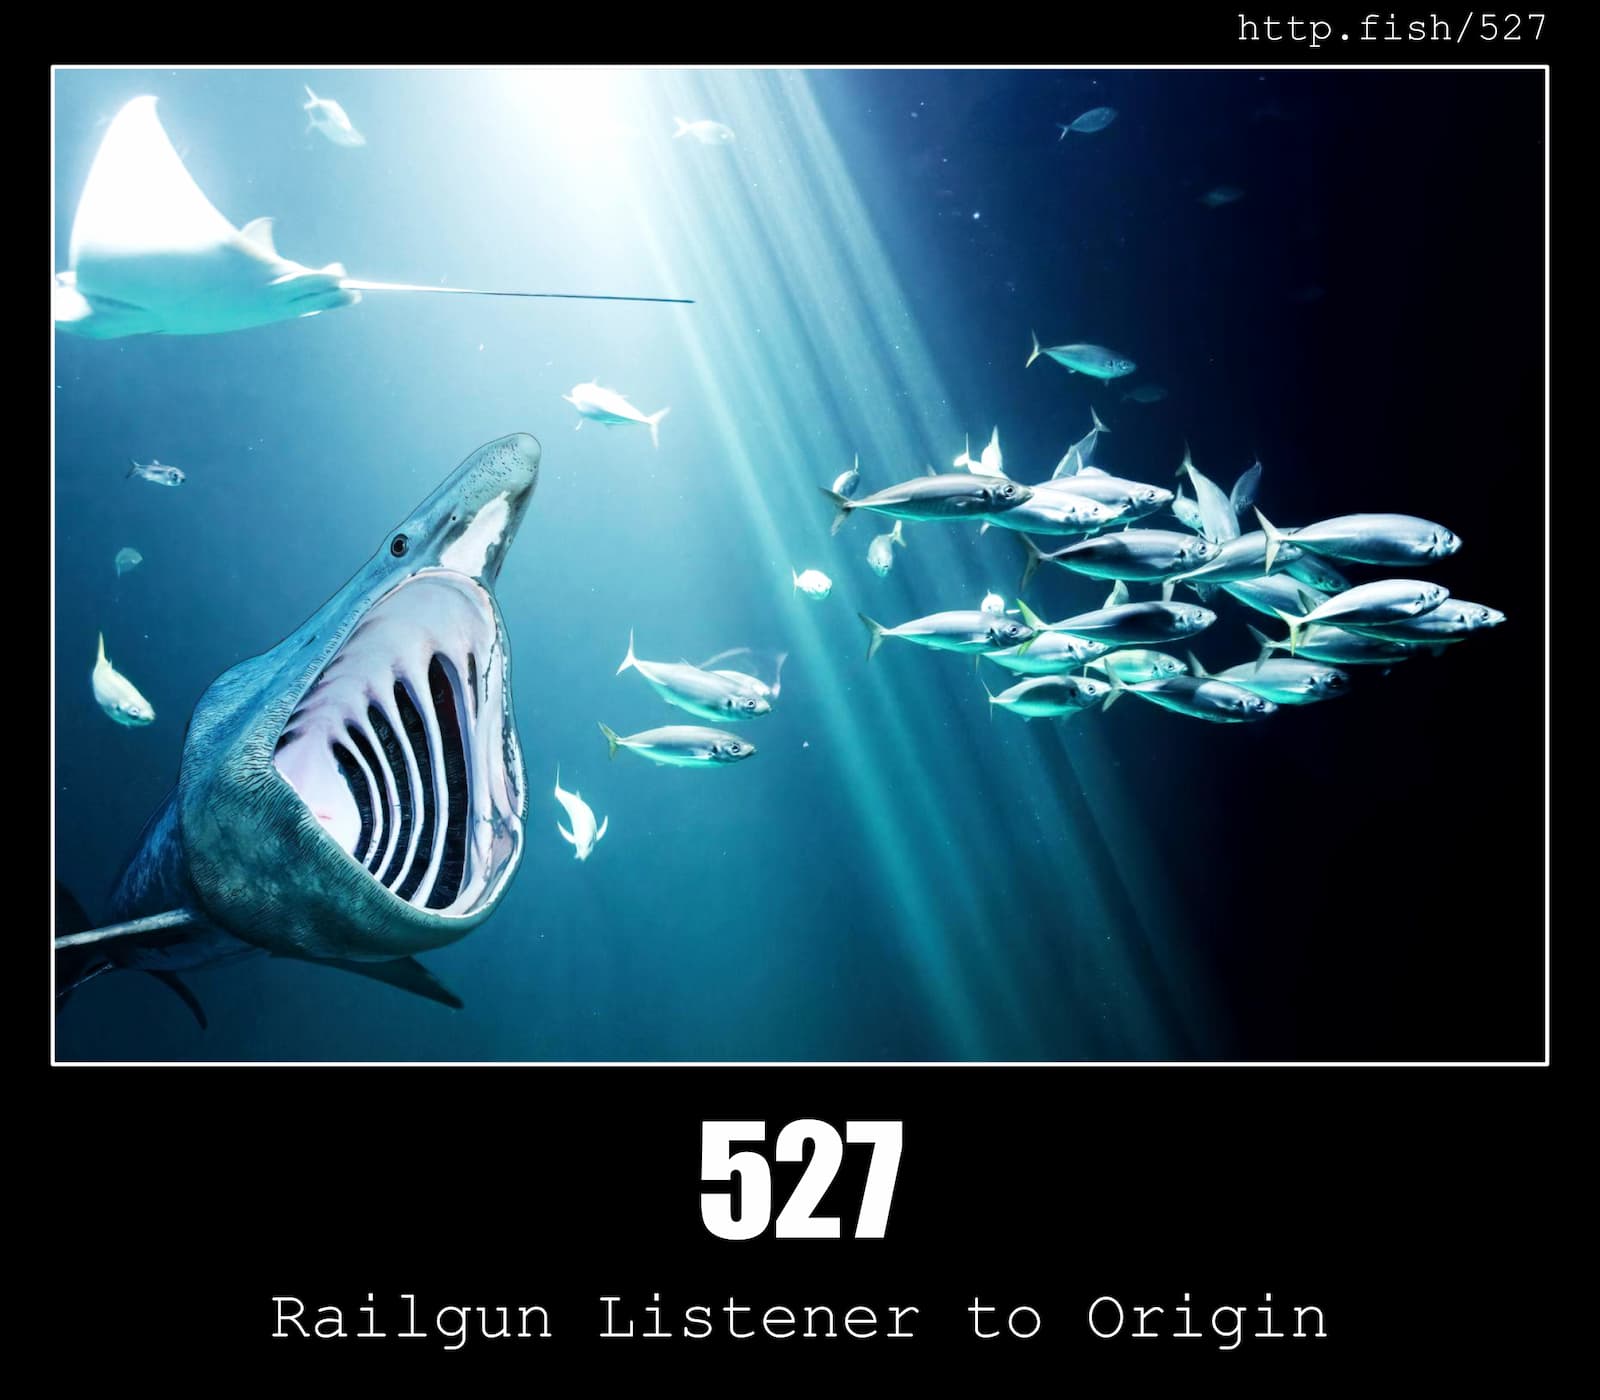 HTTP Status Code 527 Railgun Listener to Origin & Fish